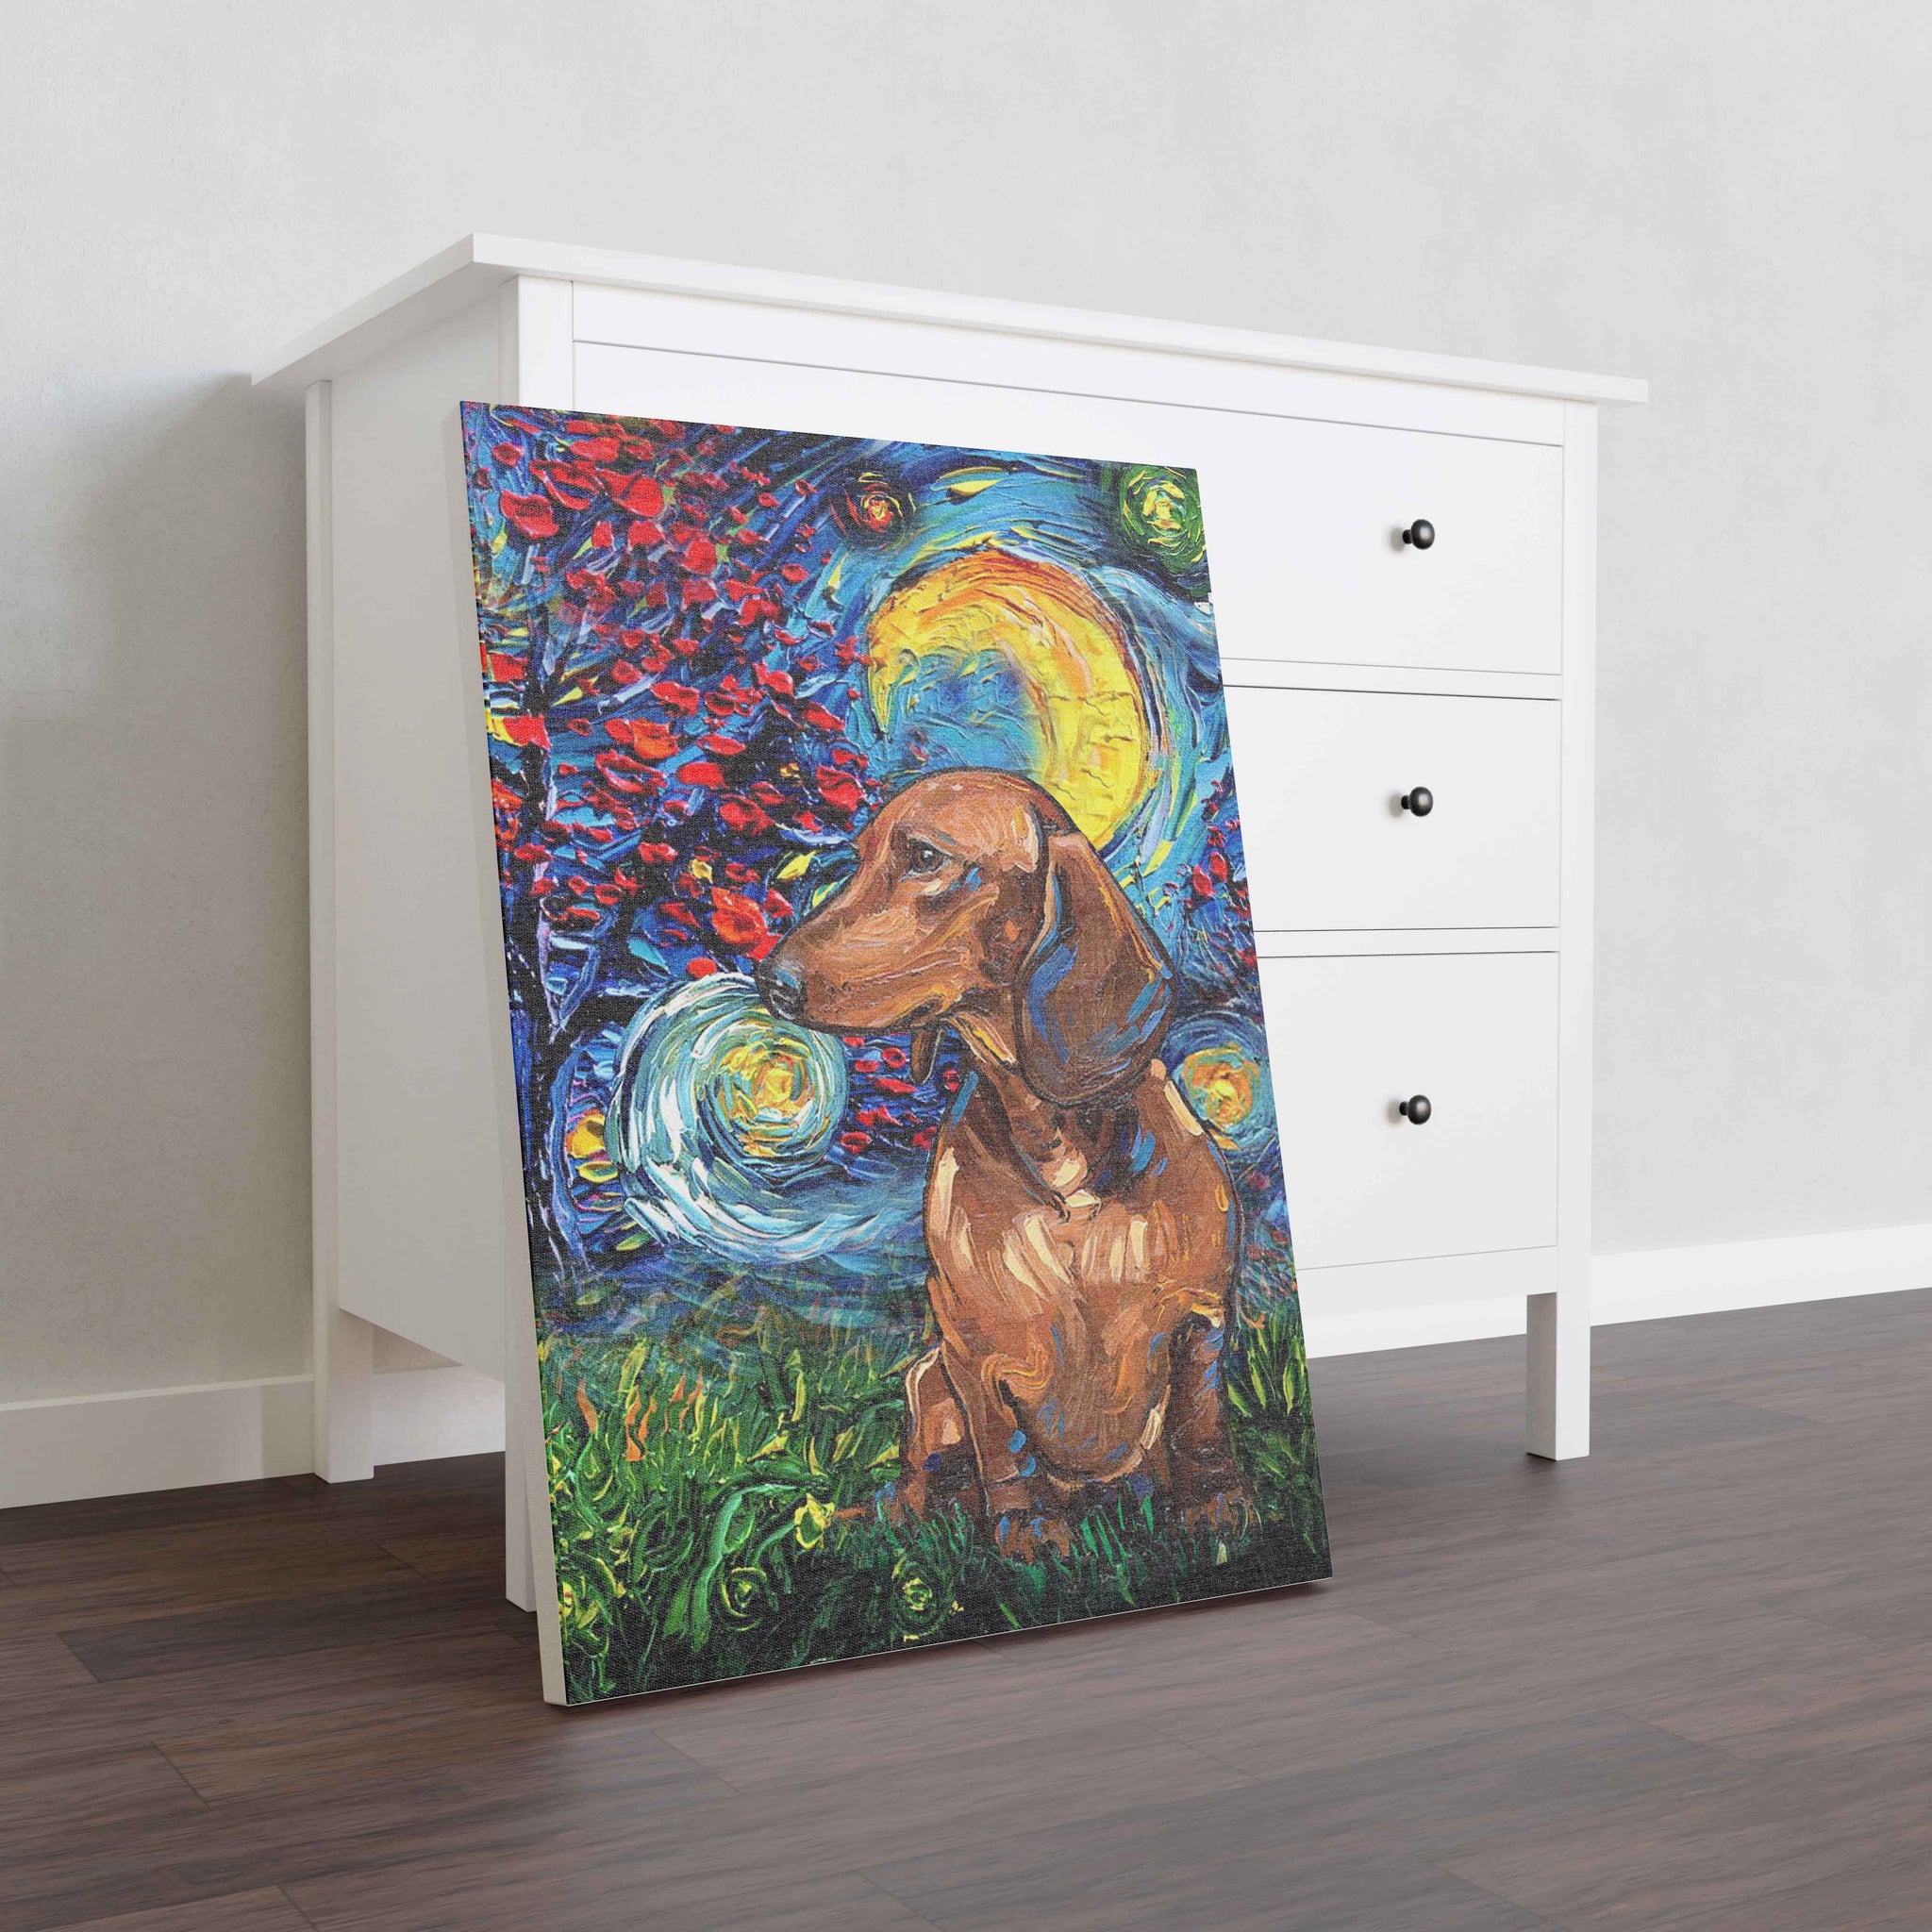 Skitongifts Poster No Frame, Wall Art, Home Decor Dachshund Dog Starry Night Style Halloween-TT1008